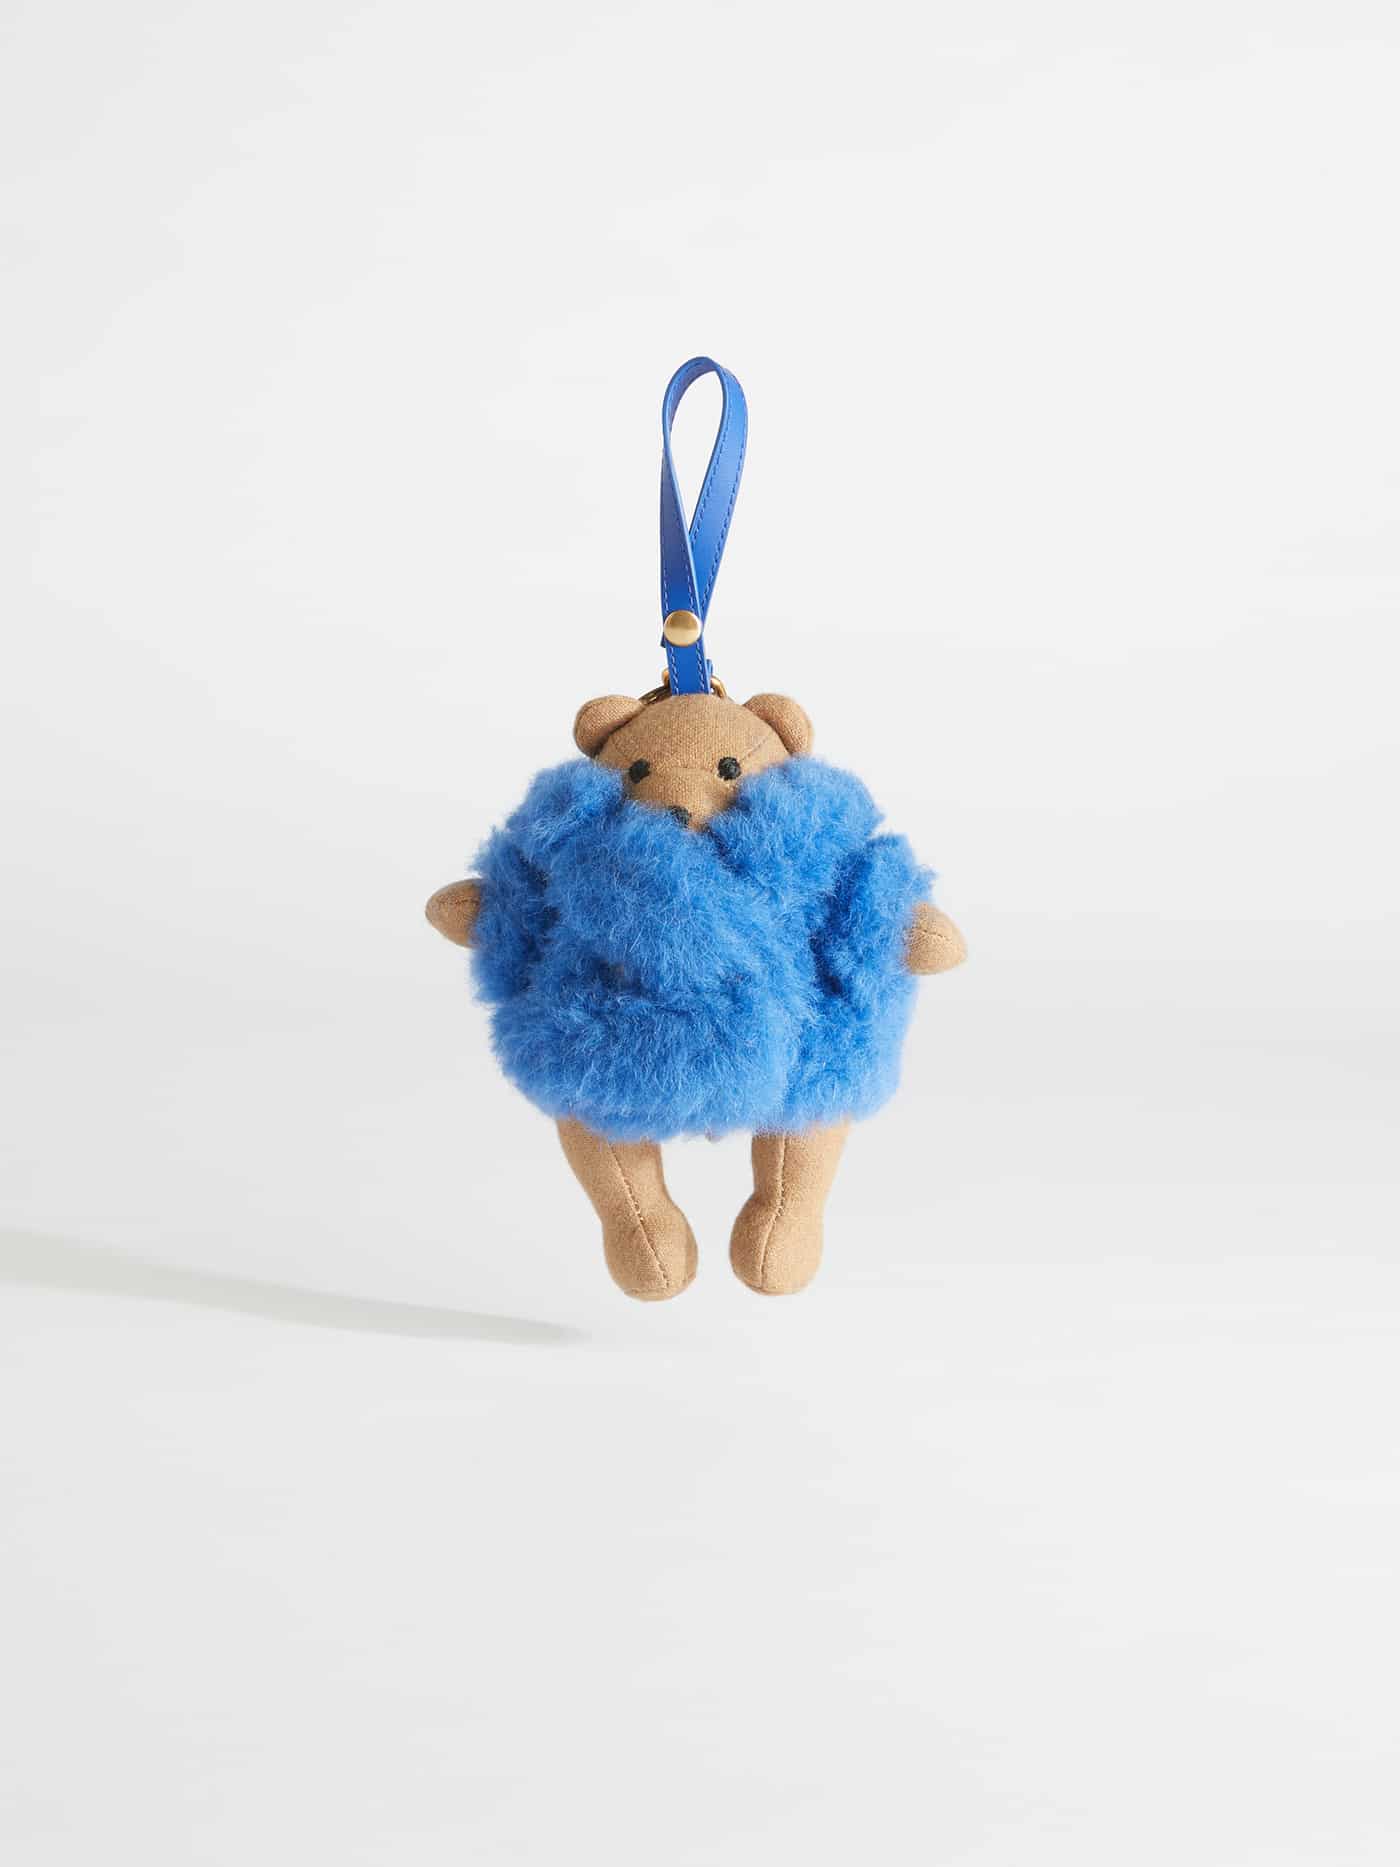 Max Mara's Teddy Bear Gift Collection Is So Cute! — Teddy Bear Gifts